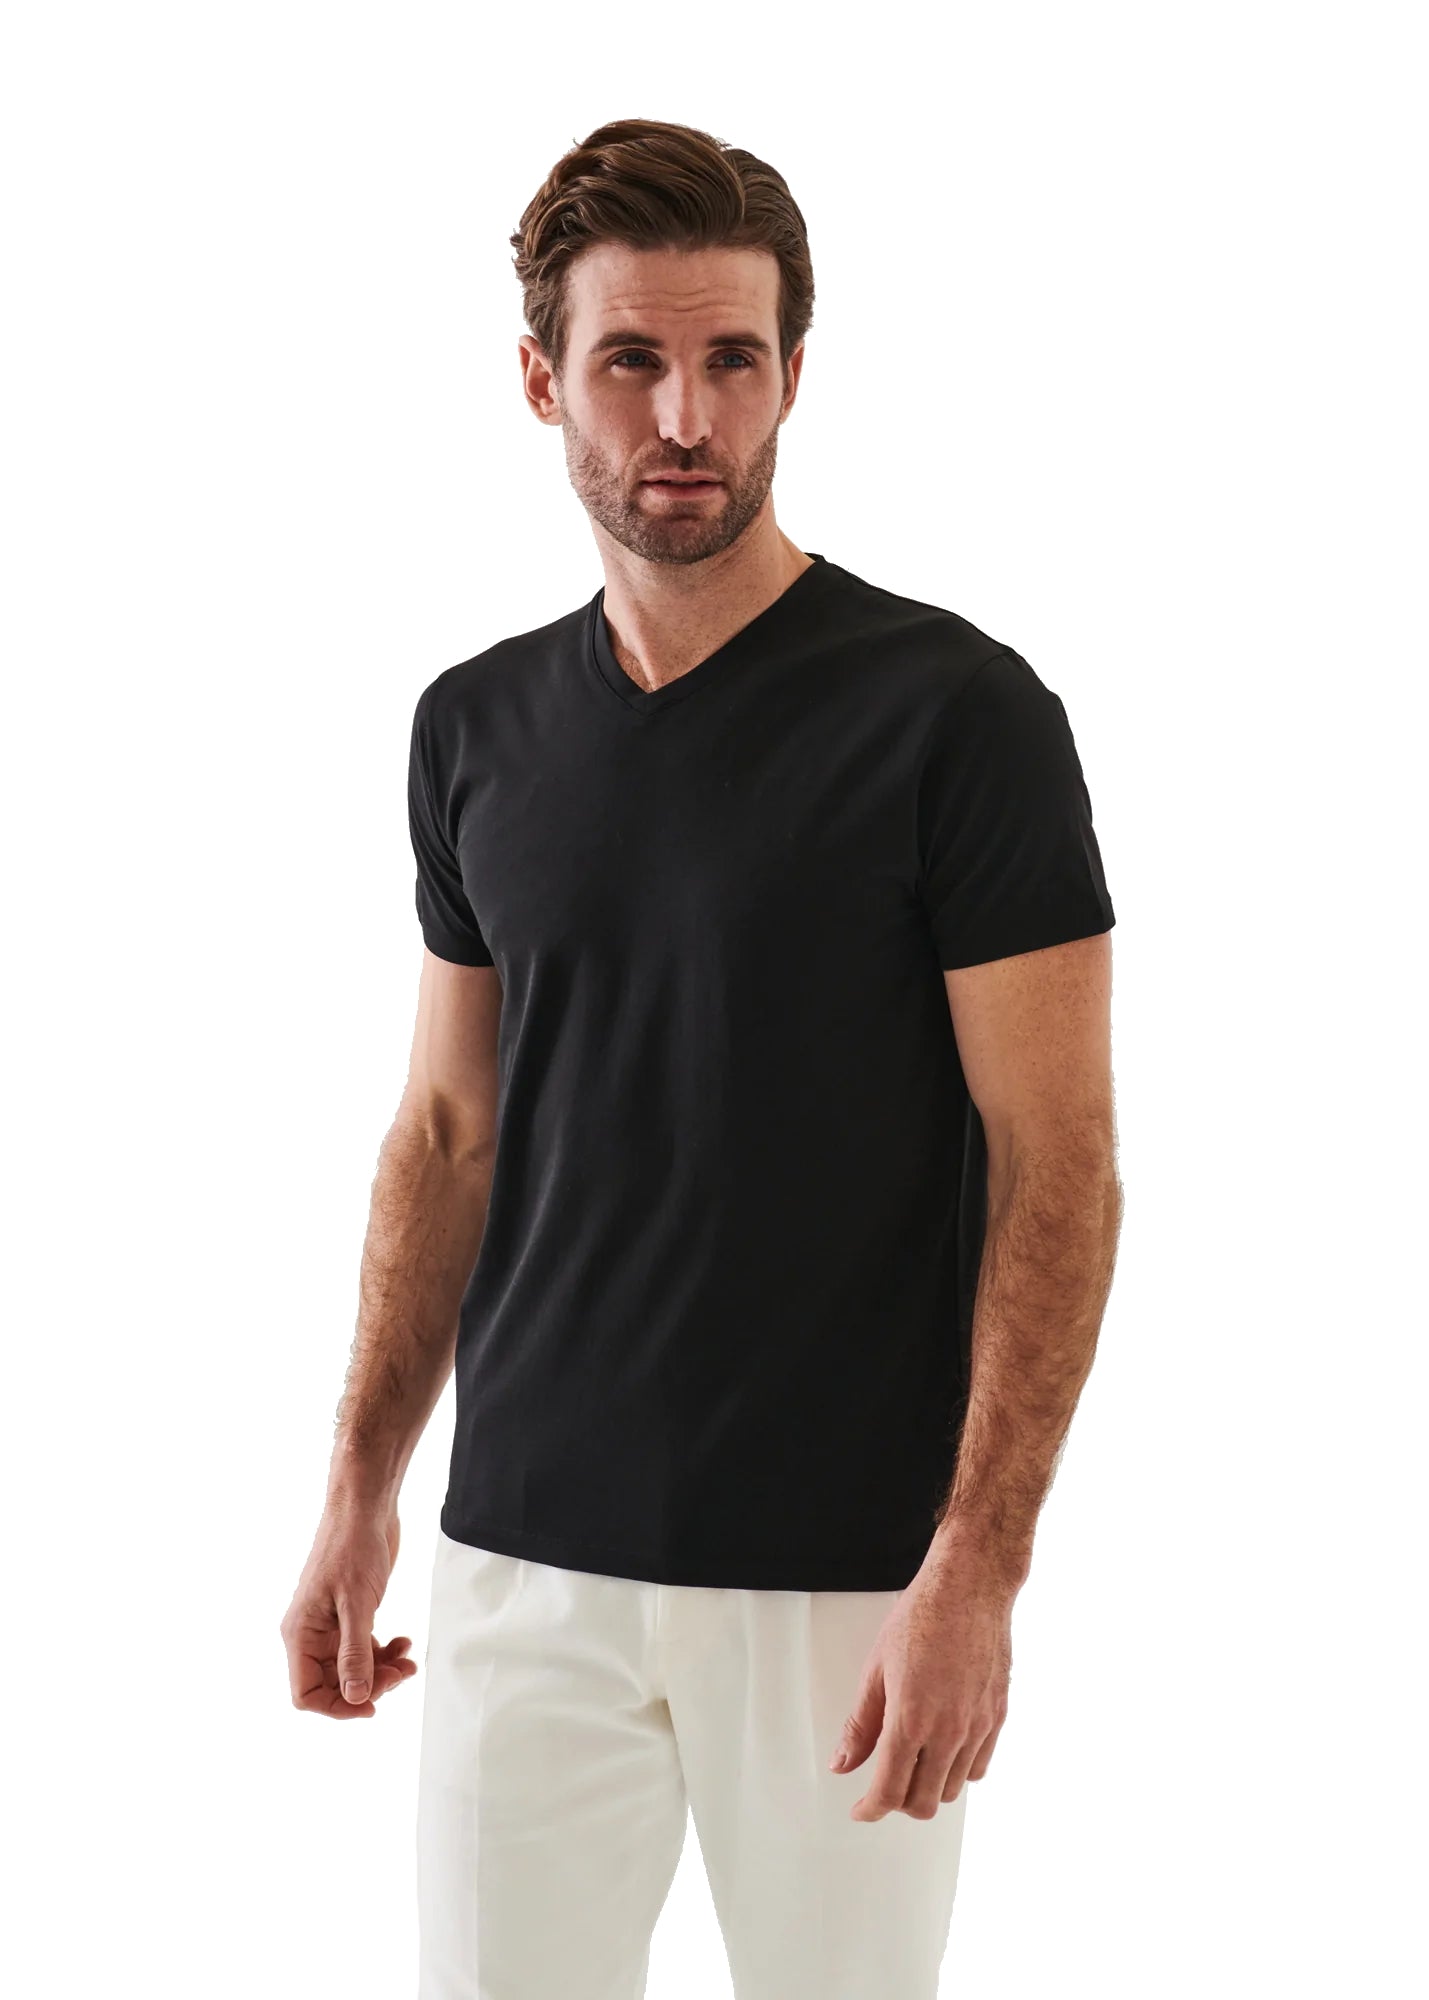 Patrick Assaraf Peruvian Short Sleeve T-Shirt Seattle Thread Company